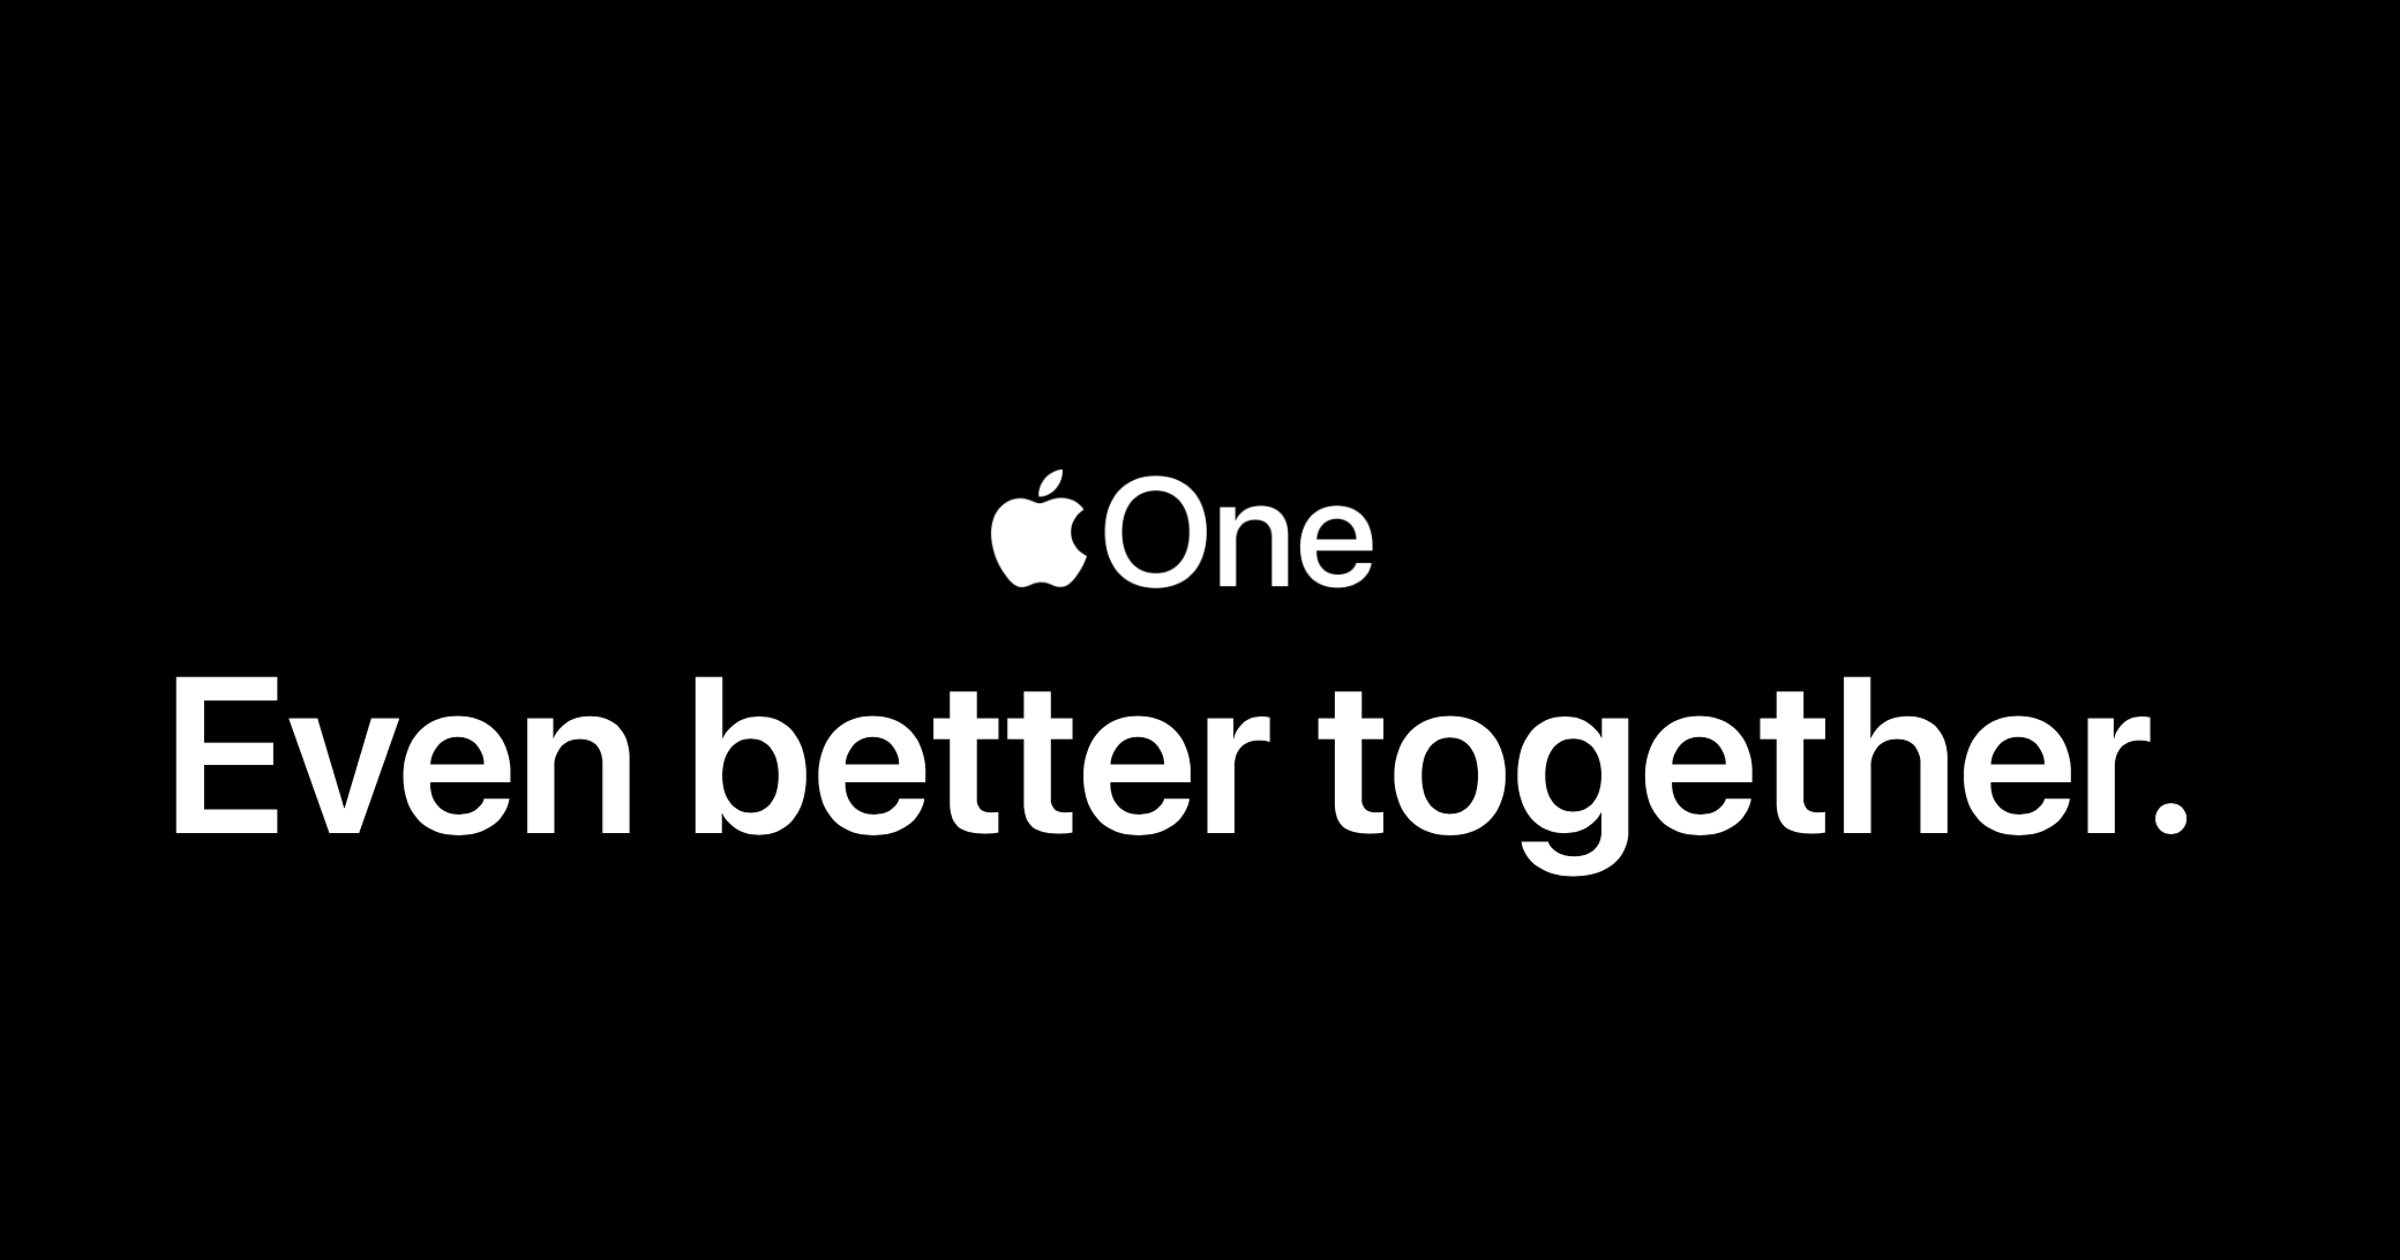 Apple One website logo